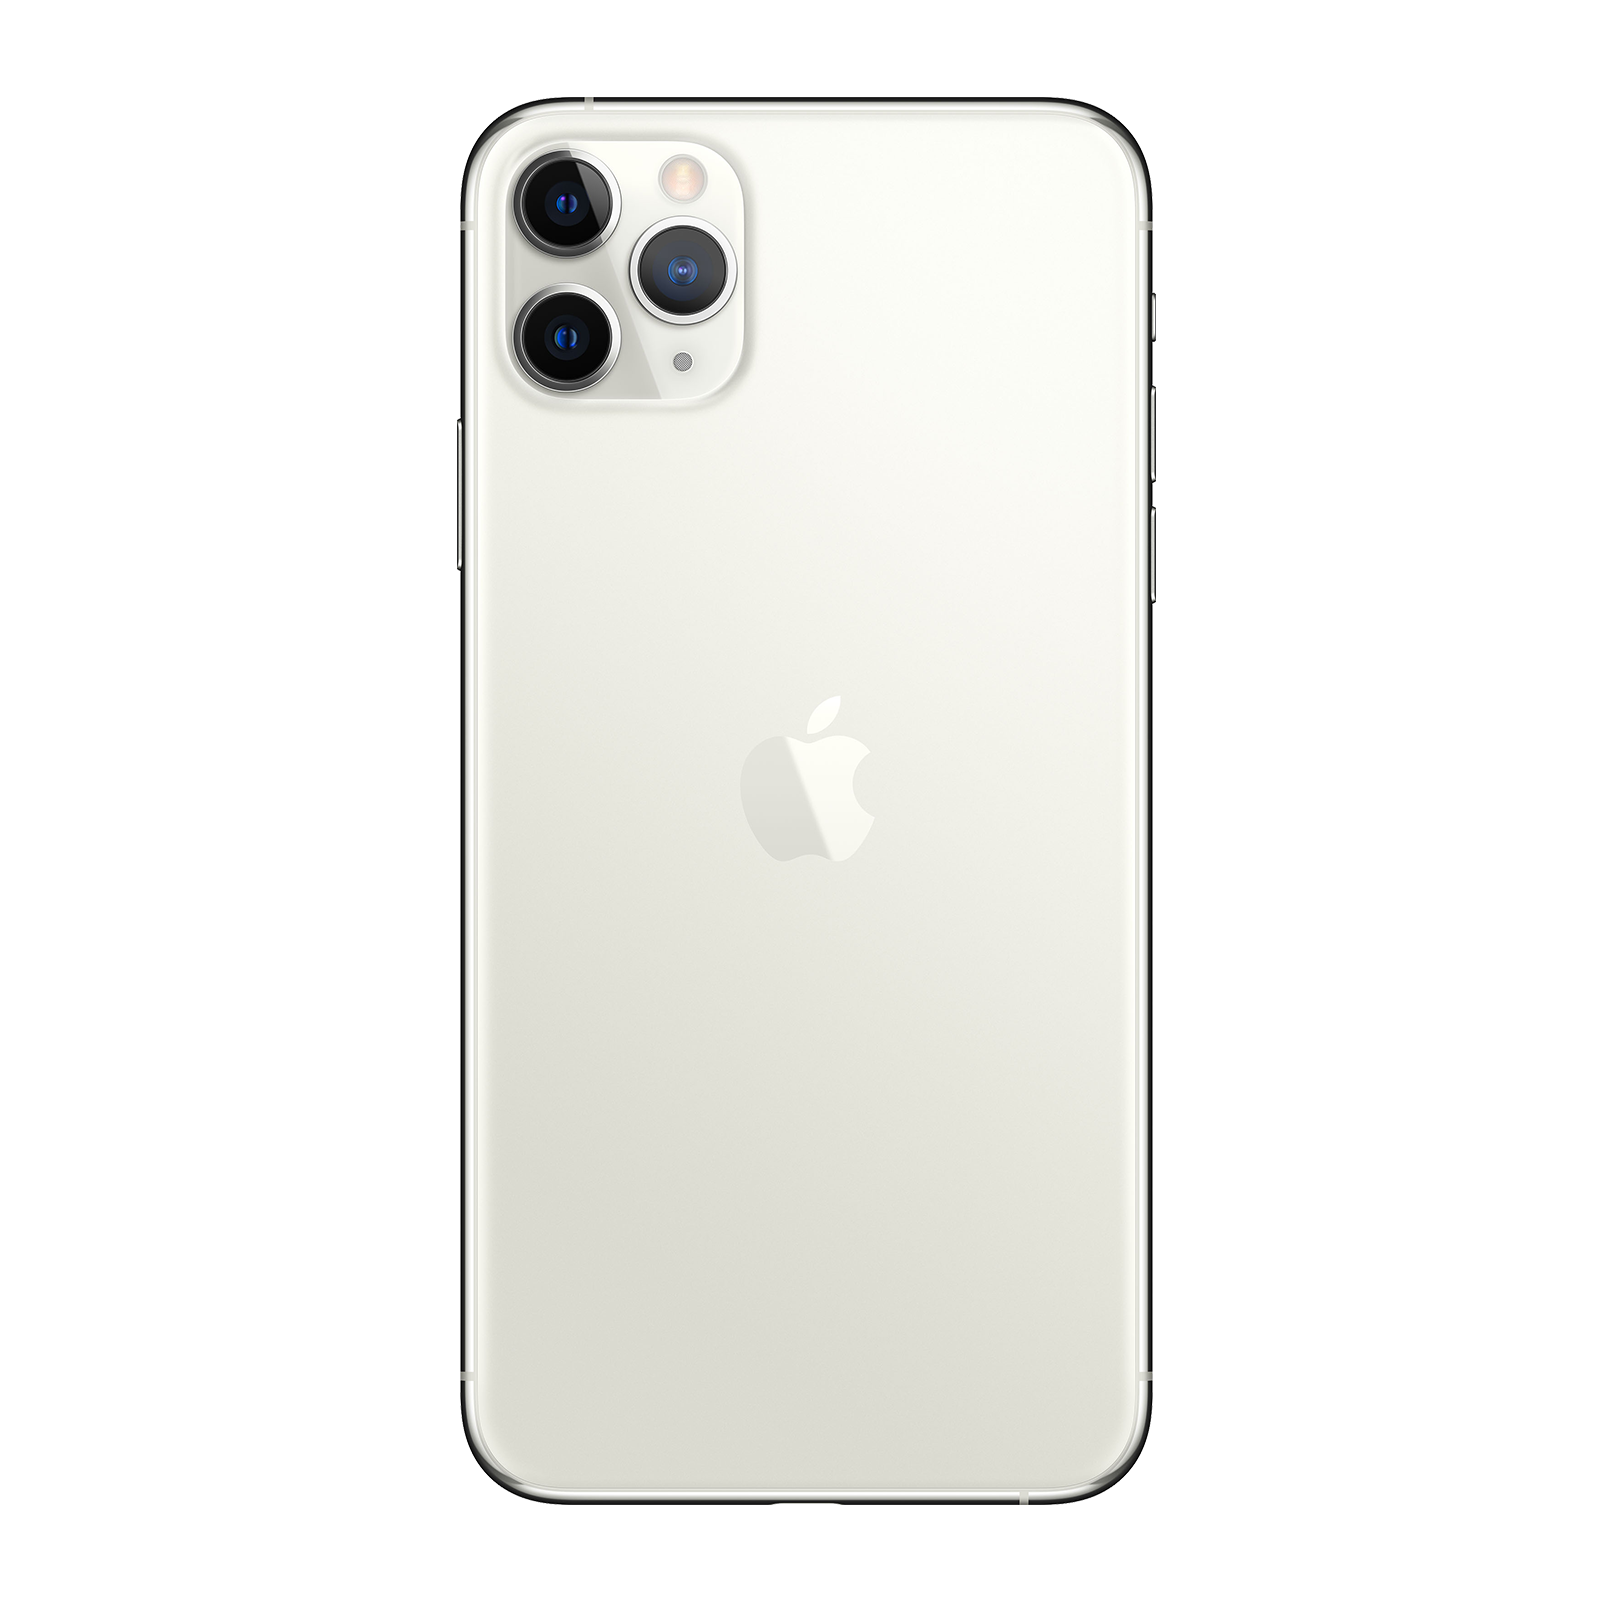 Apple iPhone 11 Pro 256GB Silver Fair - Unlocked